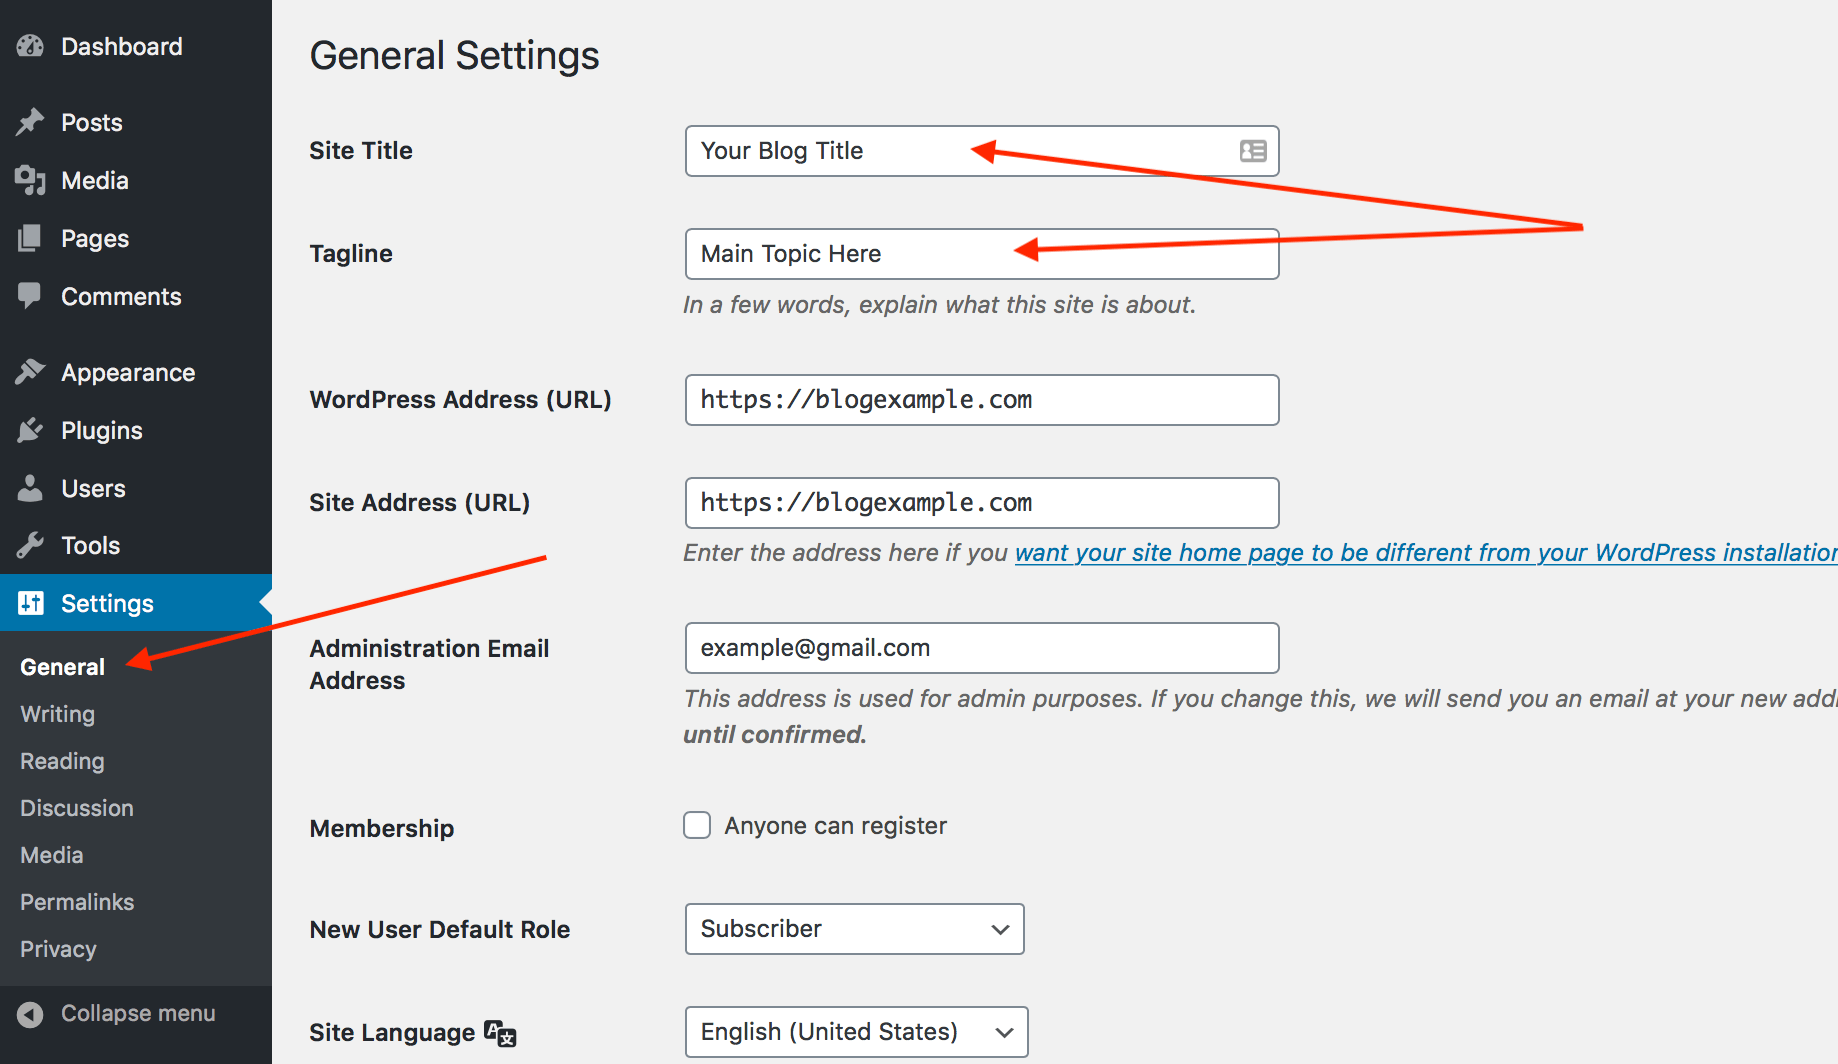 How to edit the blog settings in WordPress